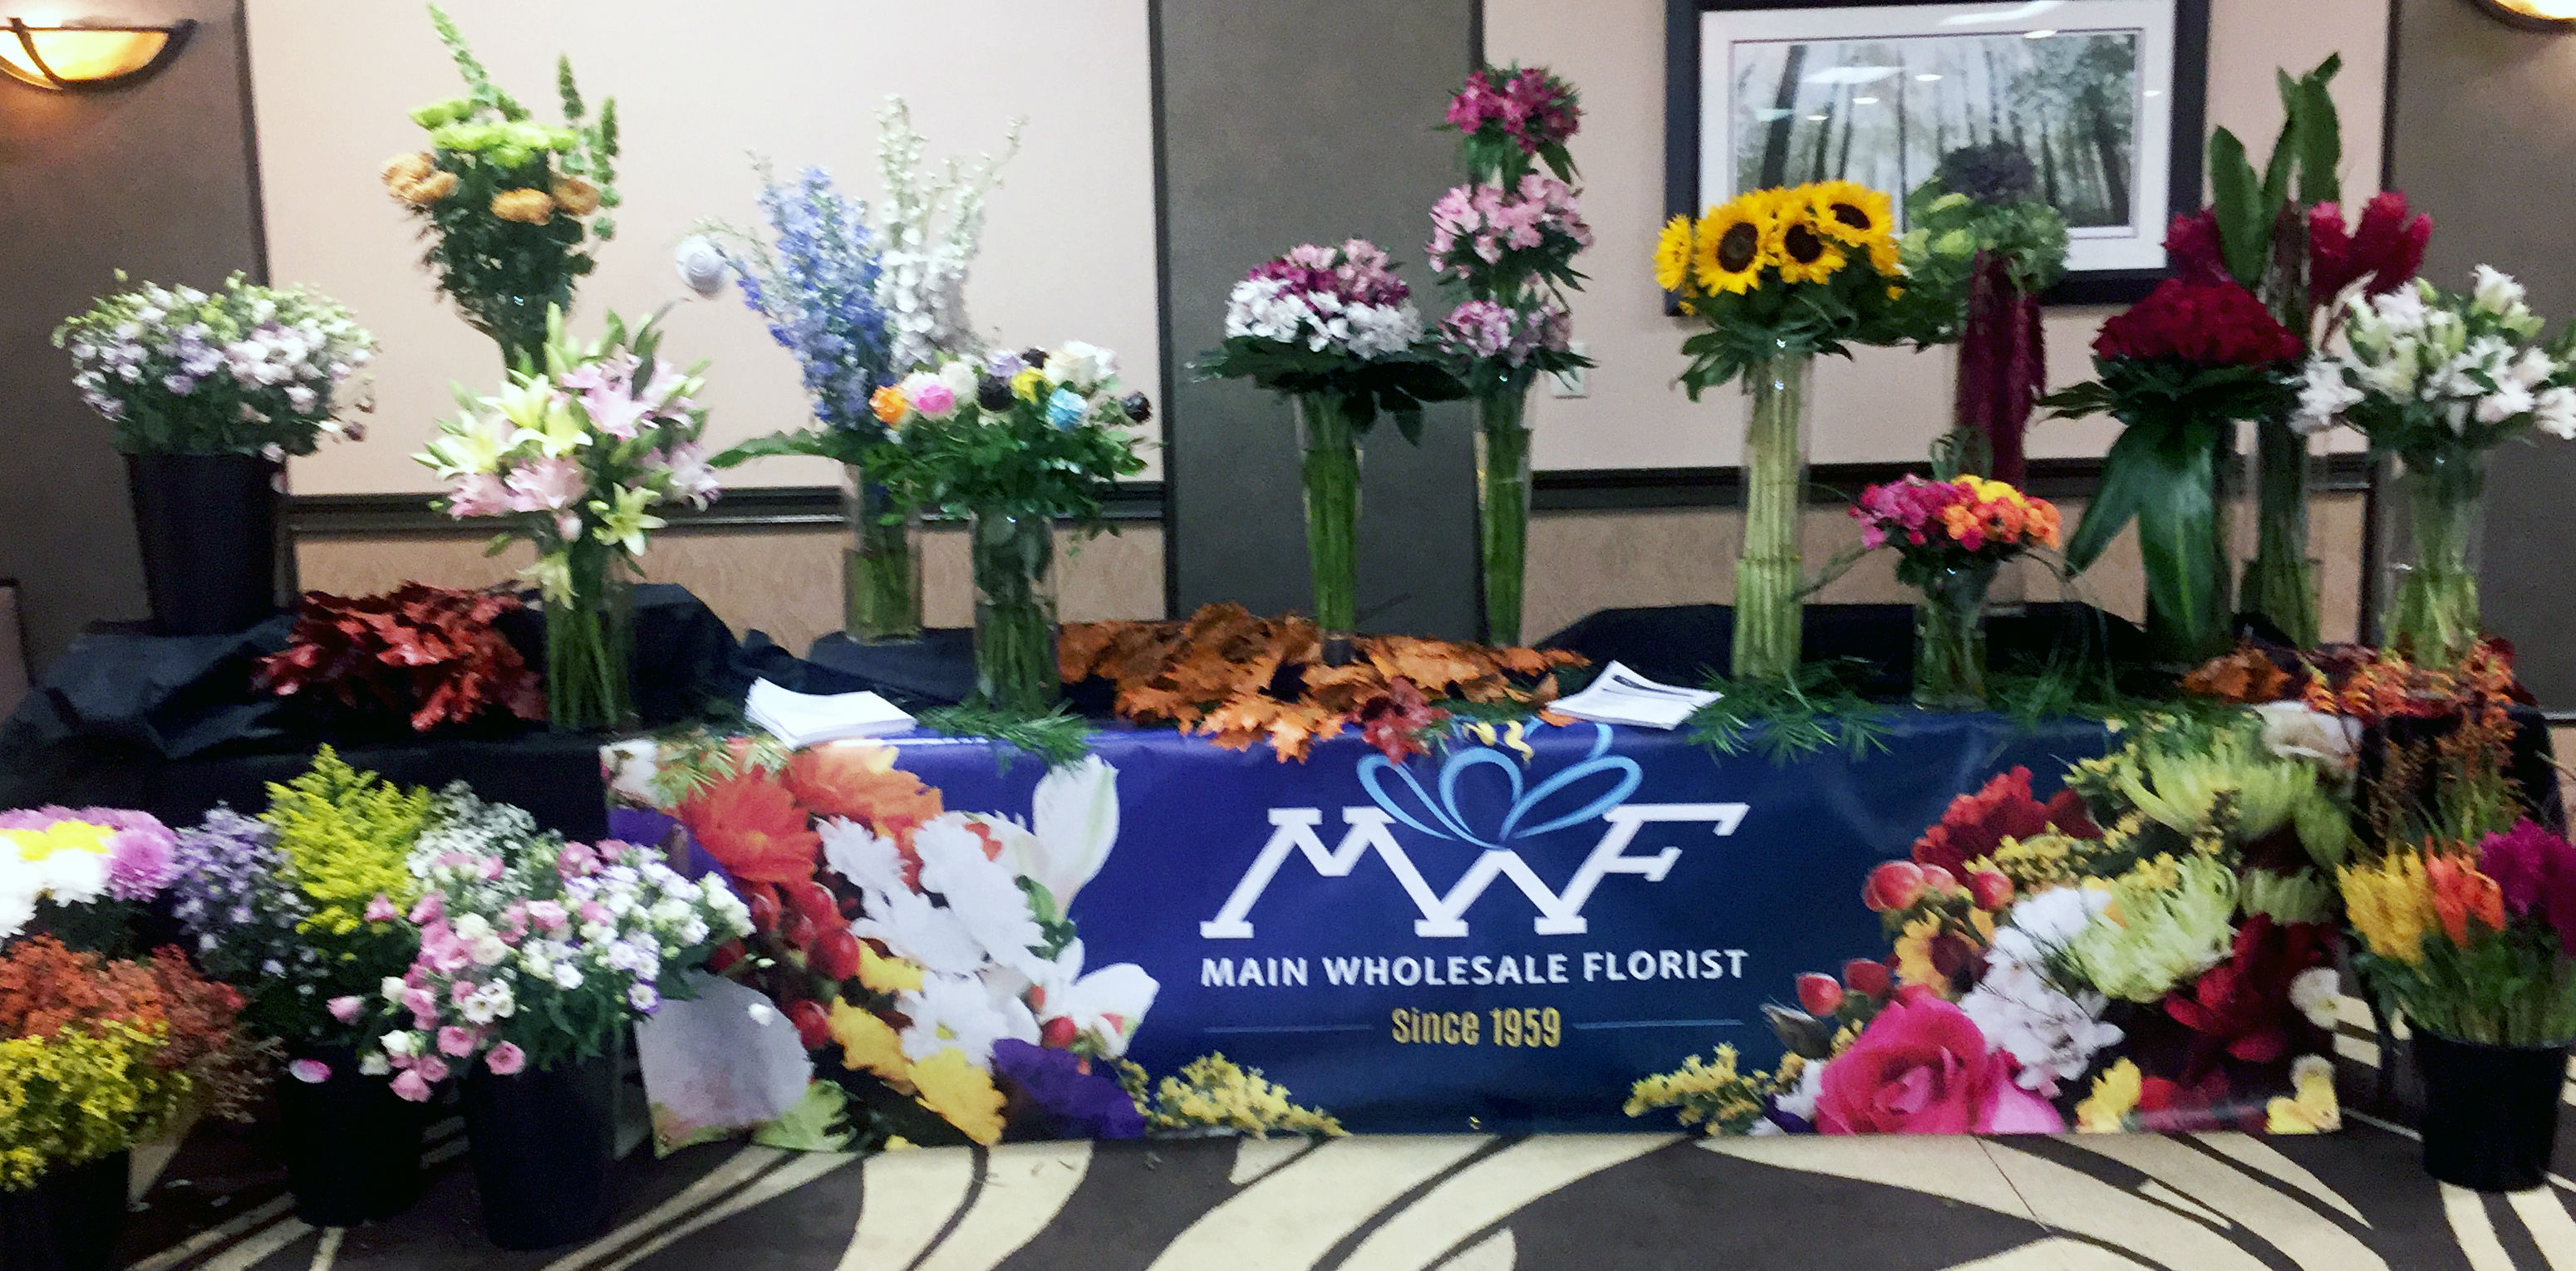 Main Wholesale Florist at the Teleflora Event & Wedding Design Show